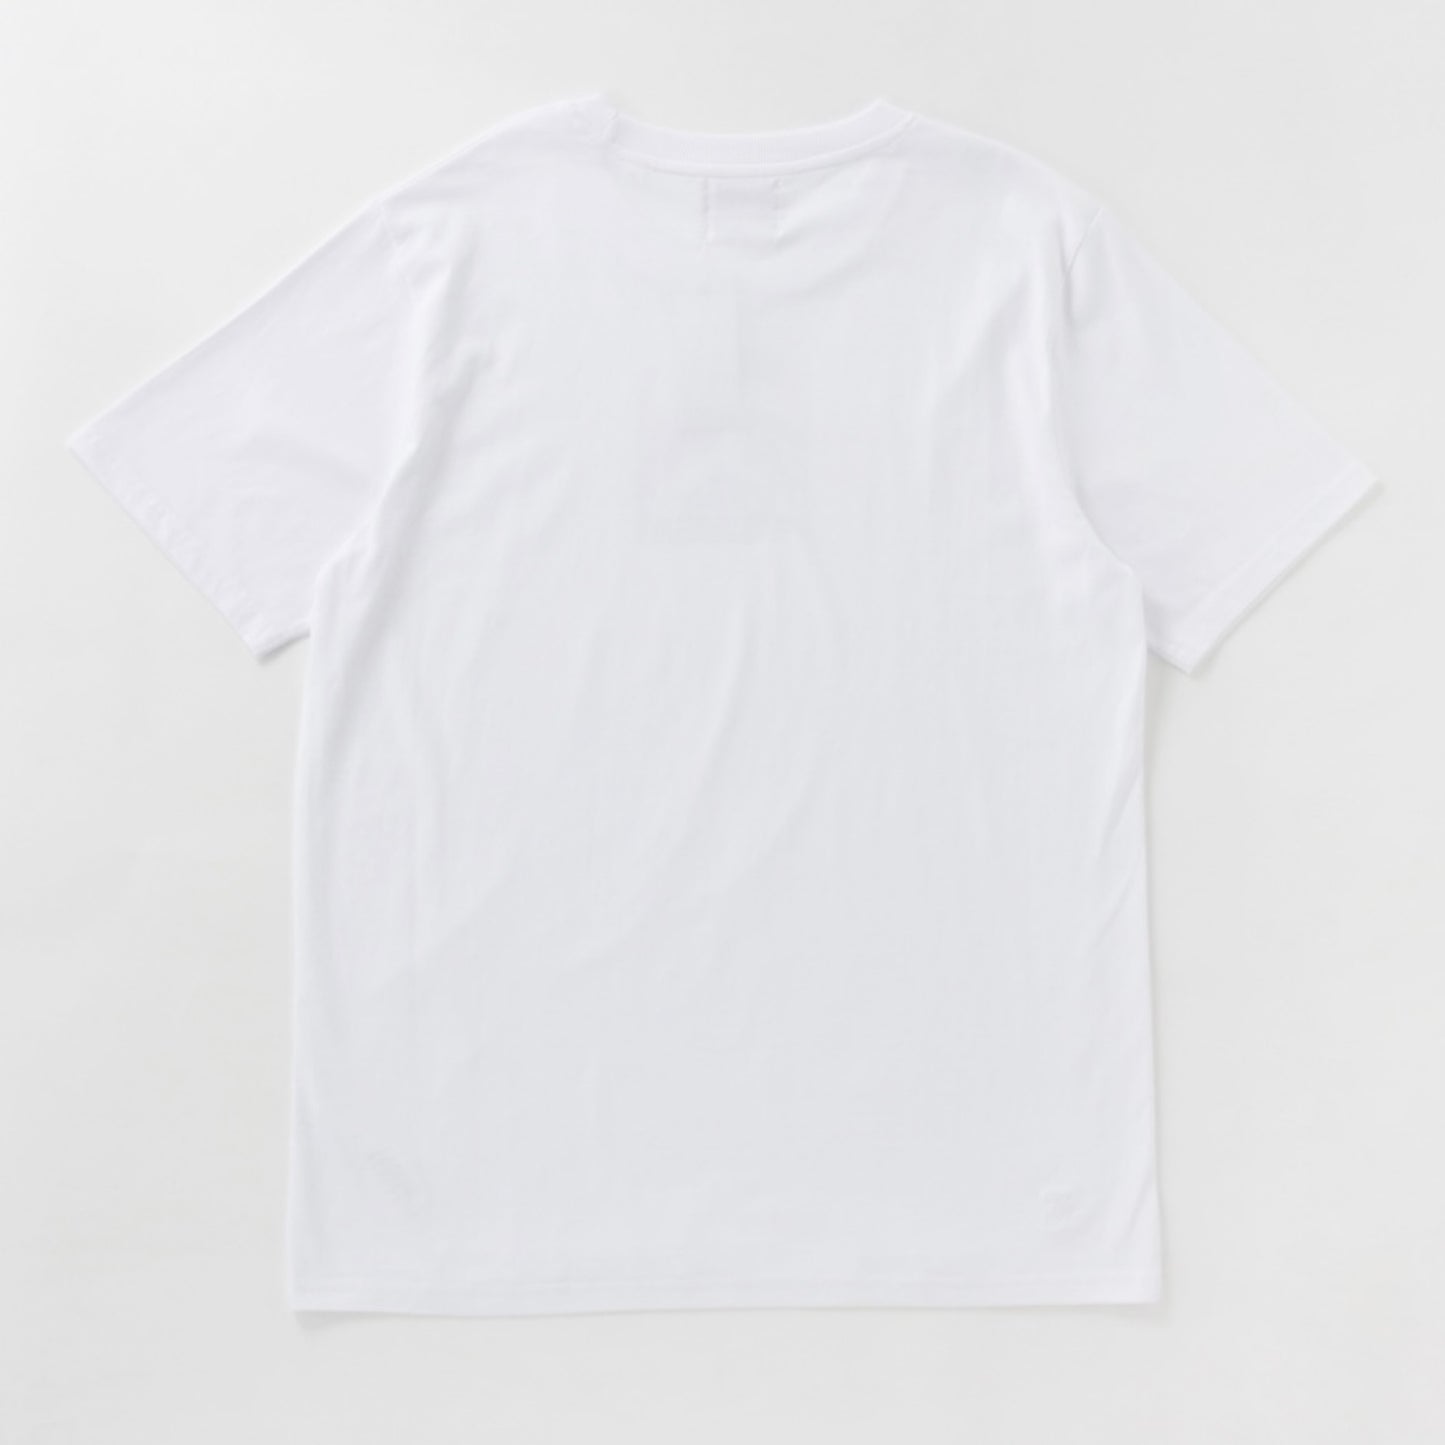 HOSEMPRE SOGNATO Tシャツ - UNISEX - ホワイト